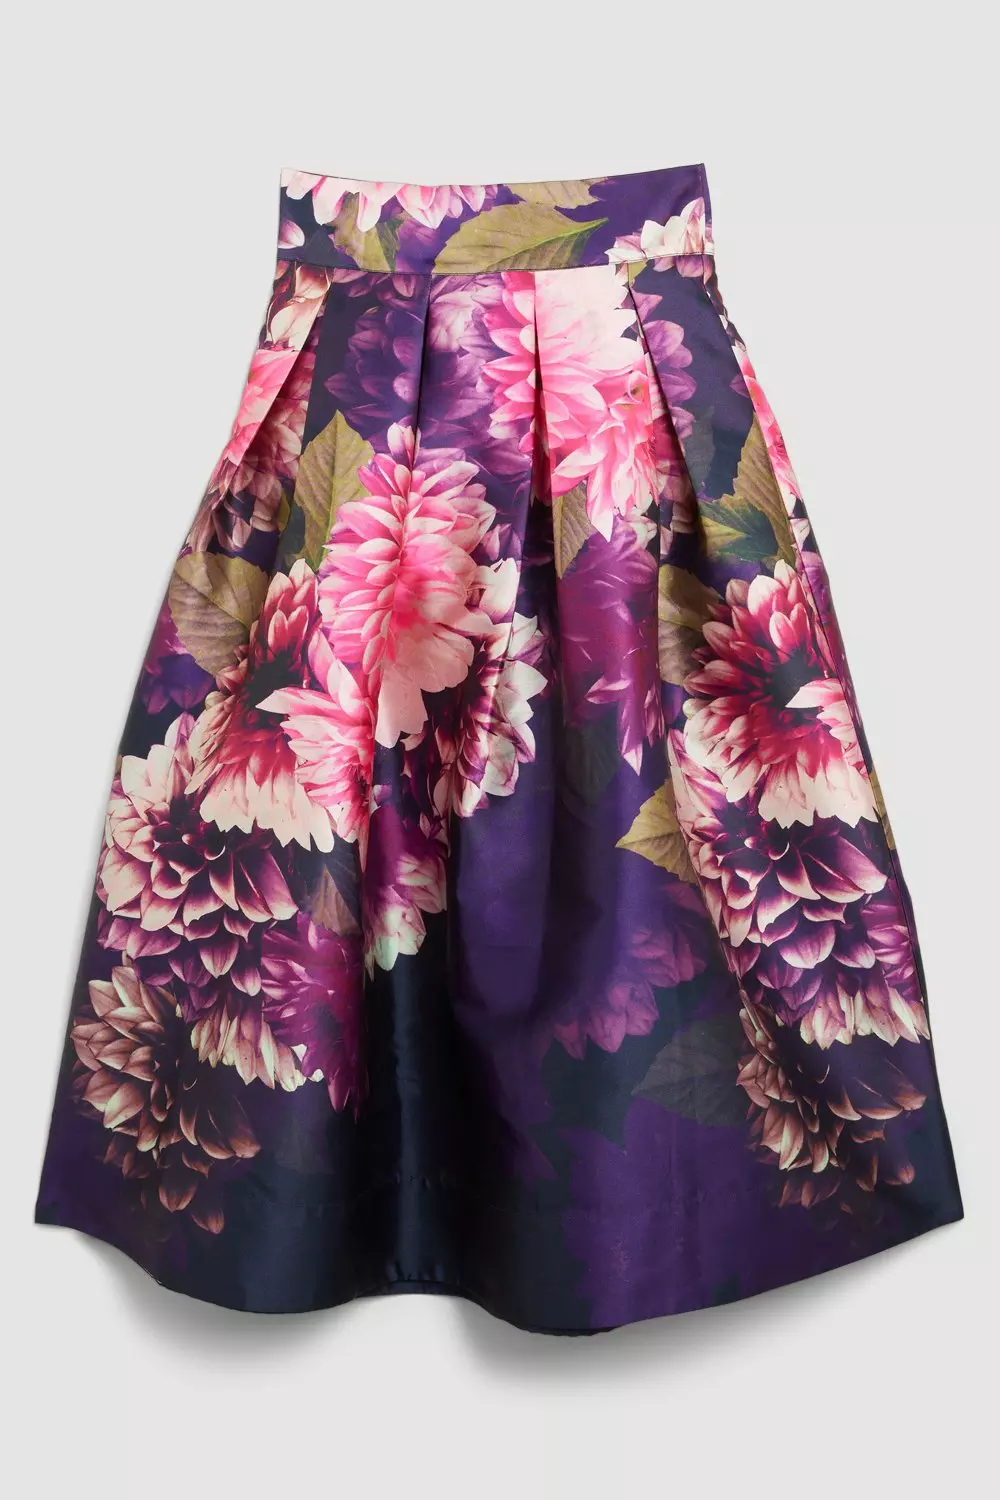 | Prom Karen Millen Floral Skirt Exploding Maxi